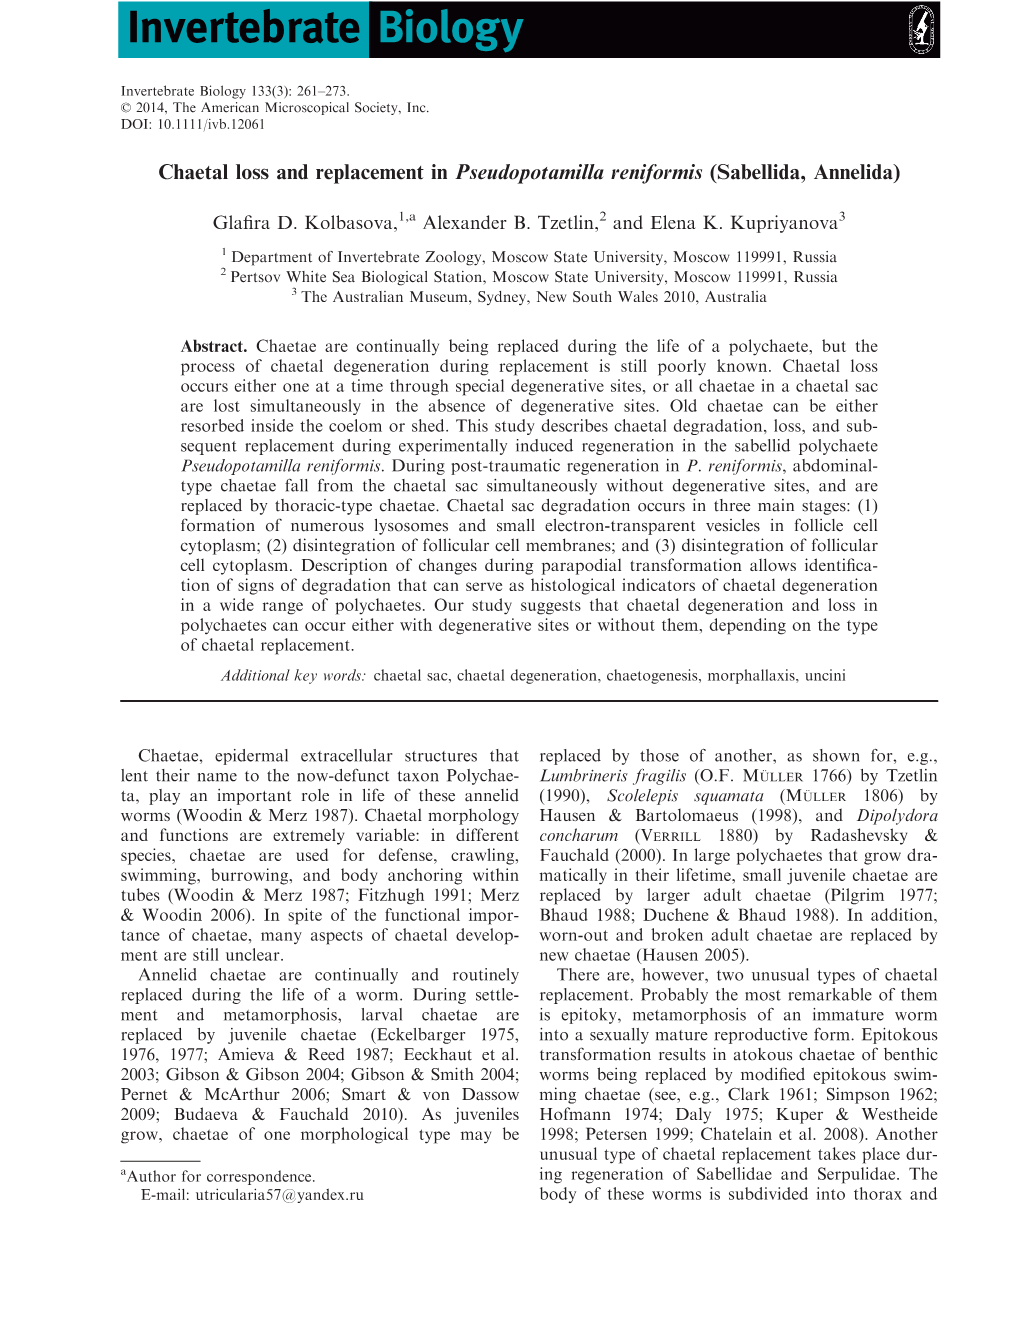 Chaetal Loss and Replacement in Pseudopotamilla Reniformis (Sabellida, Annelida)